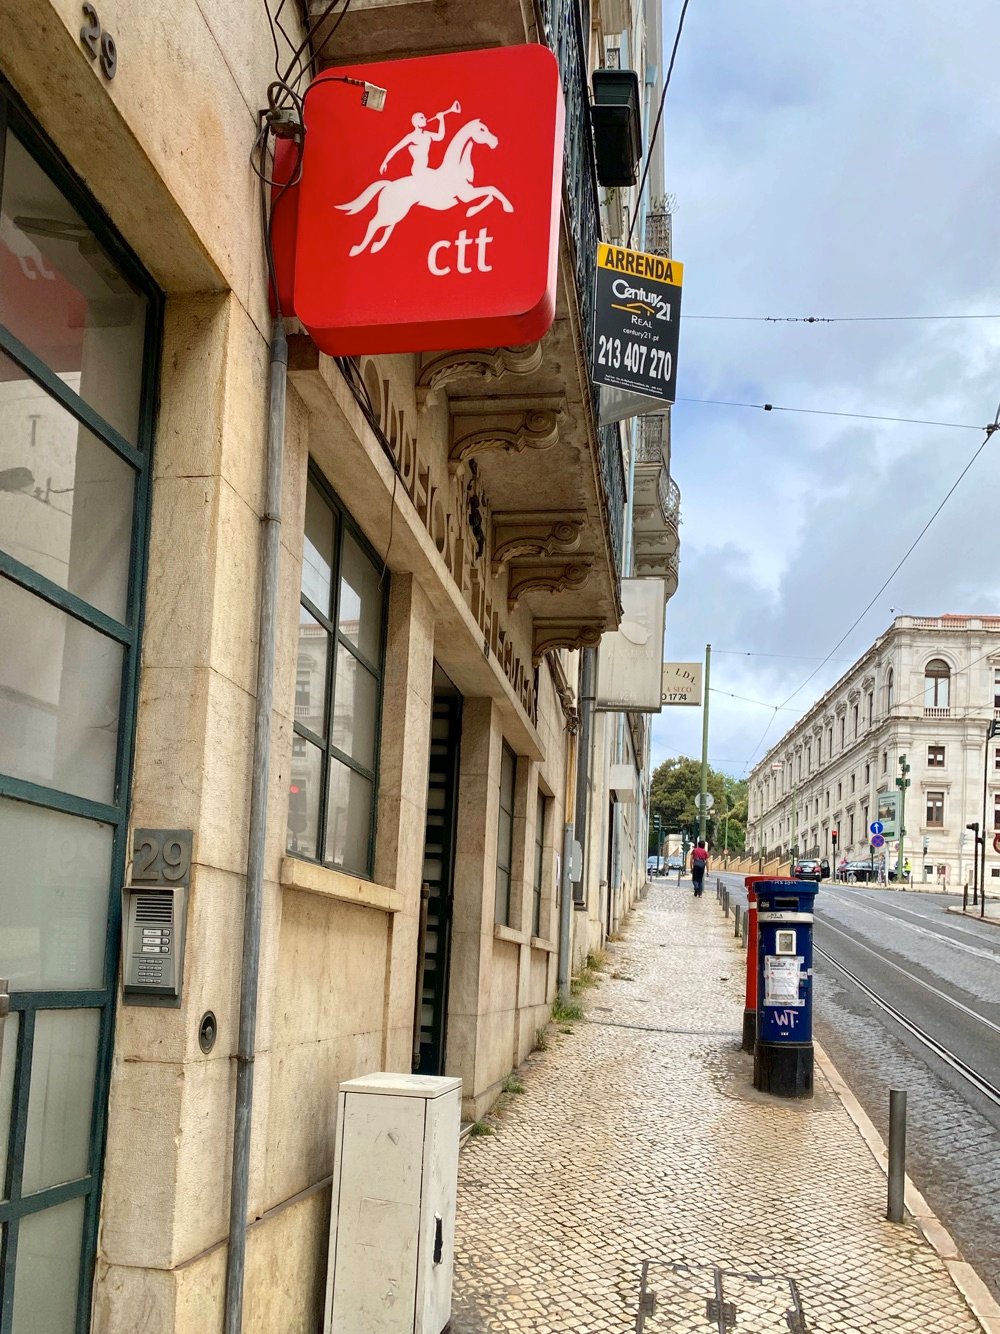 ctt office in lisbon